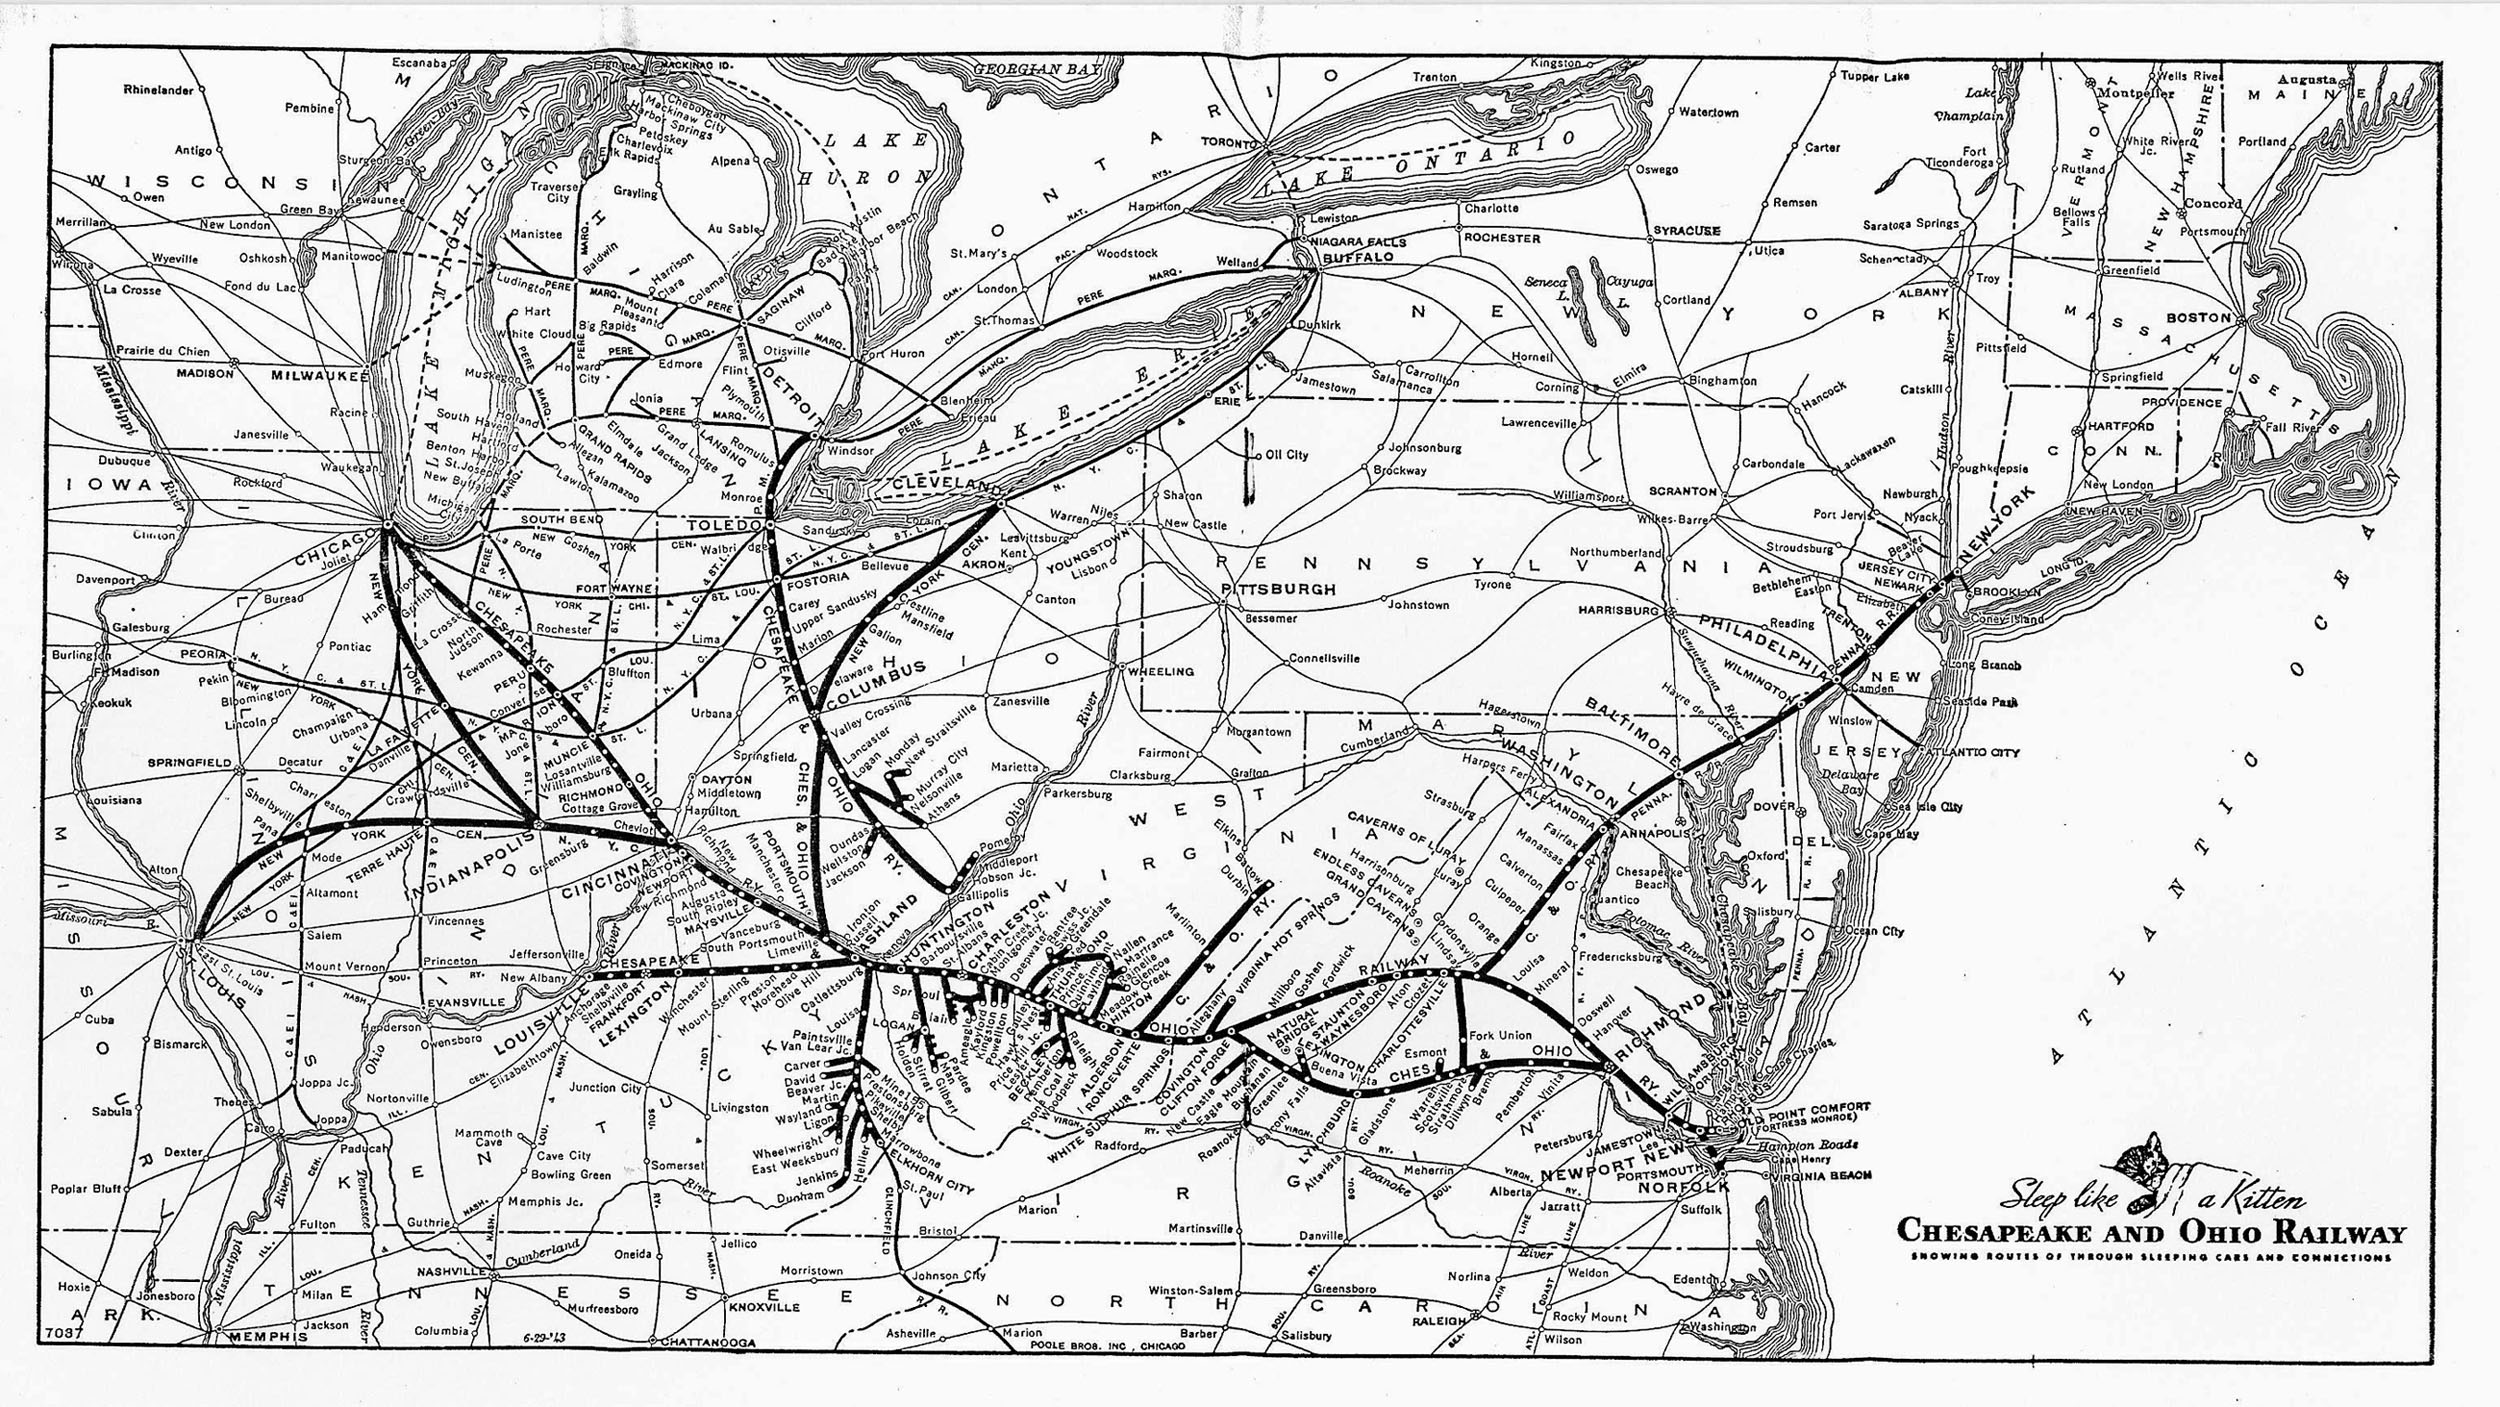 Transportation Company - Chesapeake & Ohio - Railroad